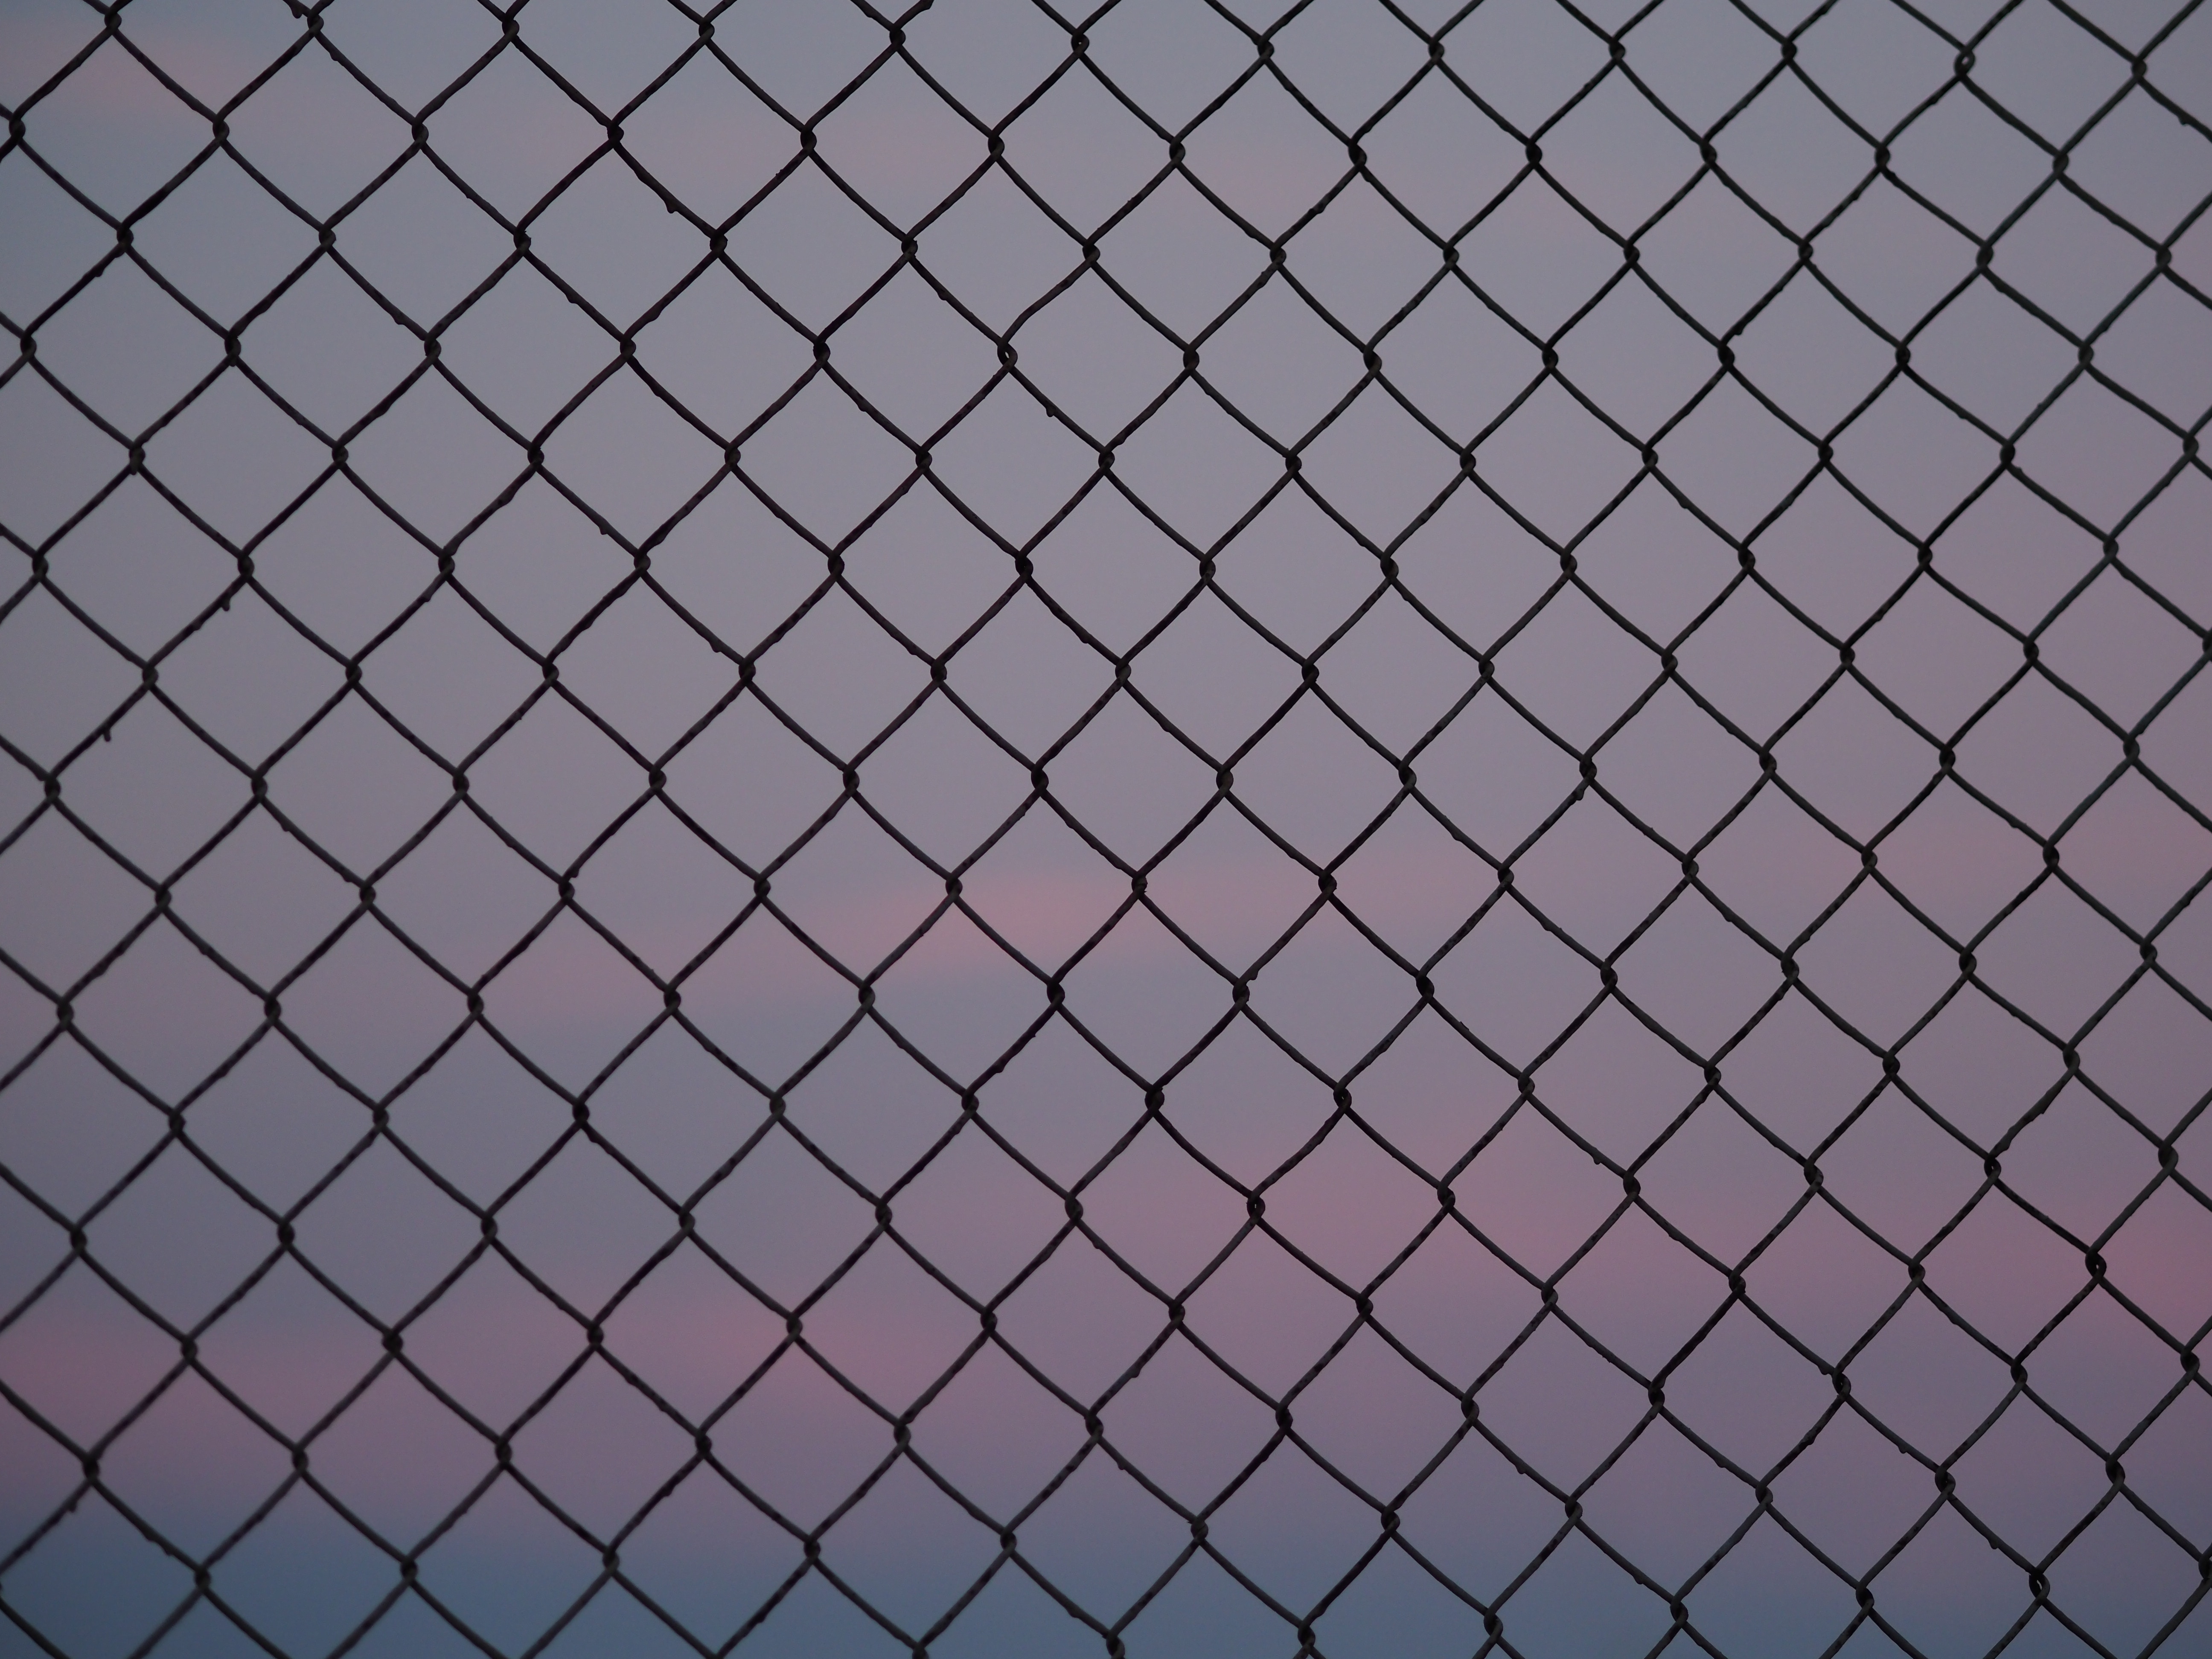 background, miscellanea, miscellaneous, grid, fence, lattice, trellis